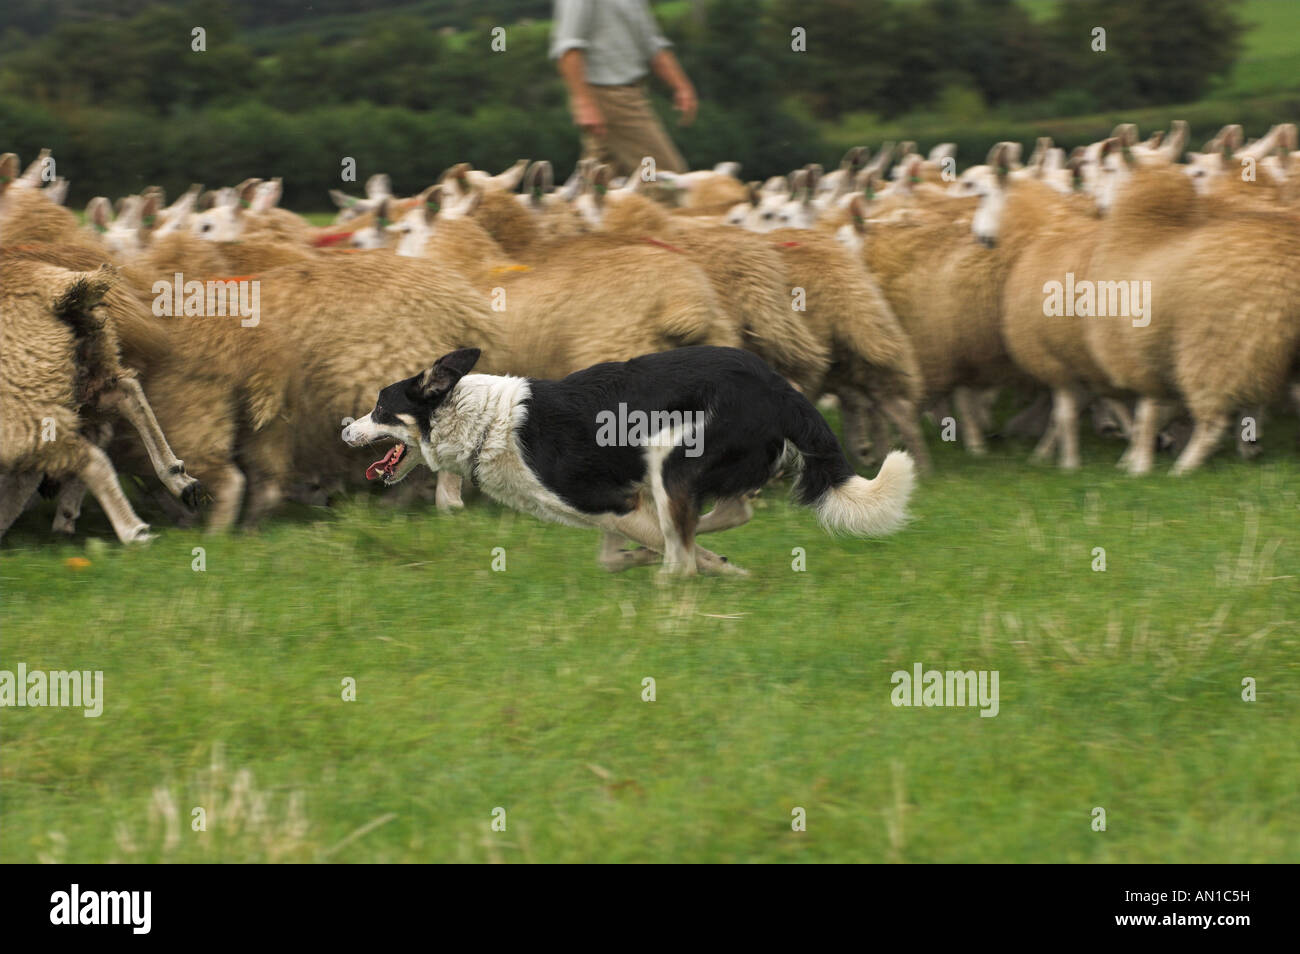 Collie dog rounding sheep up Stock Photo